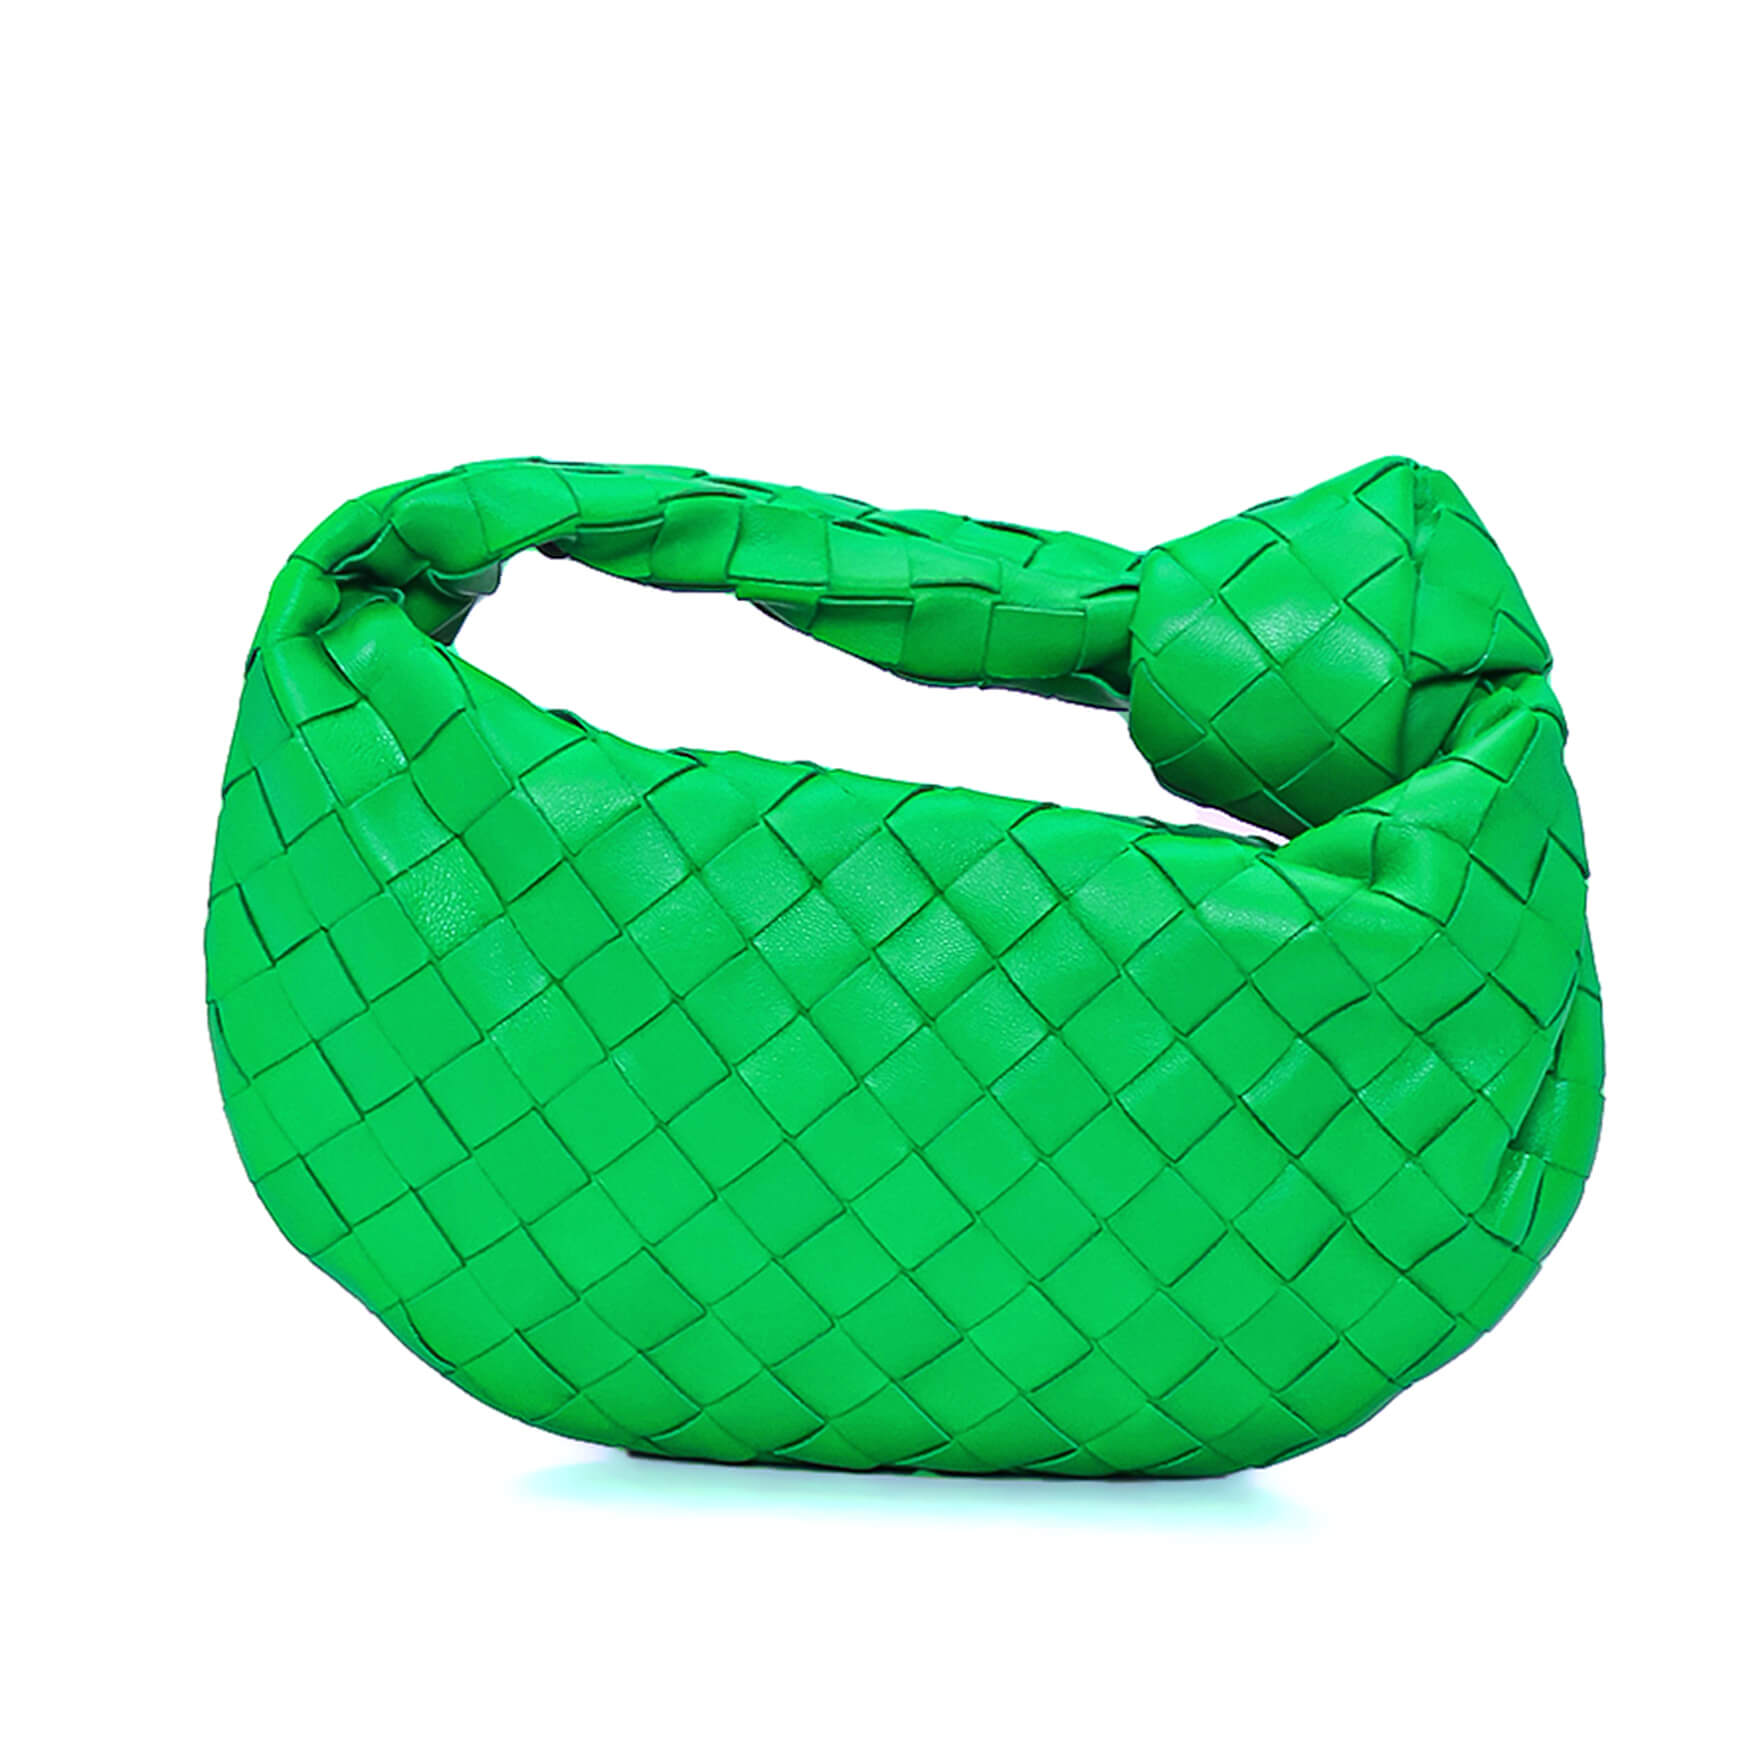 Bottega veneta - Green Leather Jodie Bag